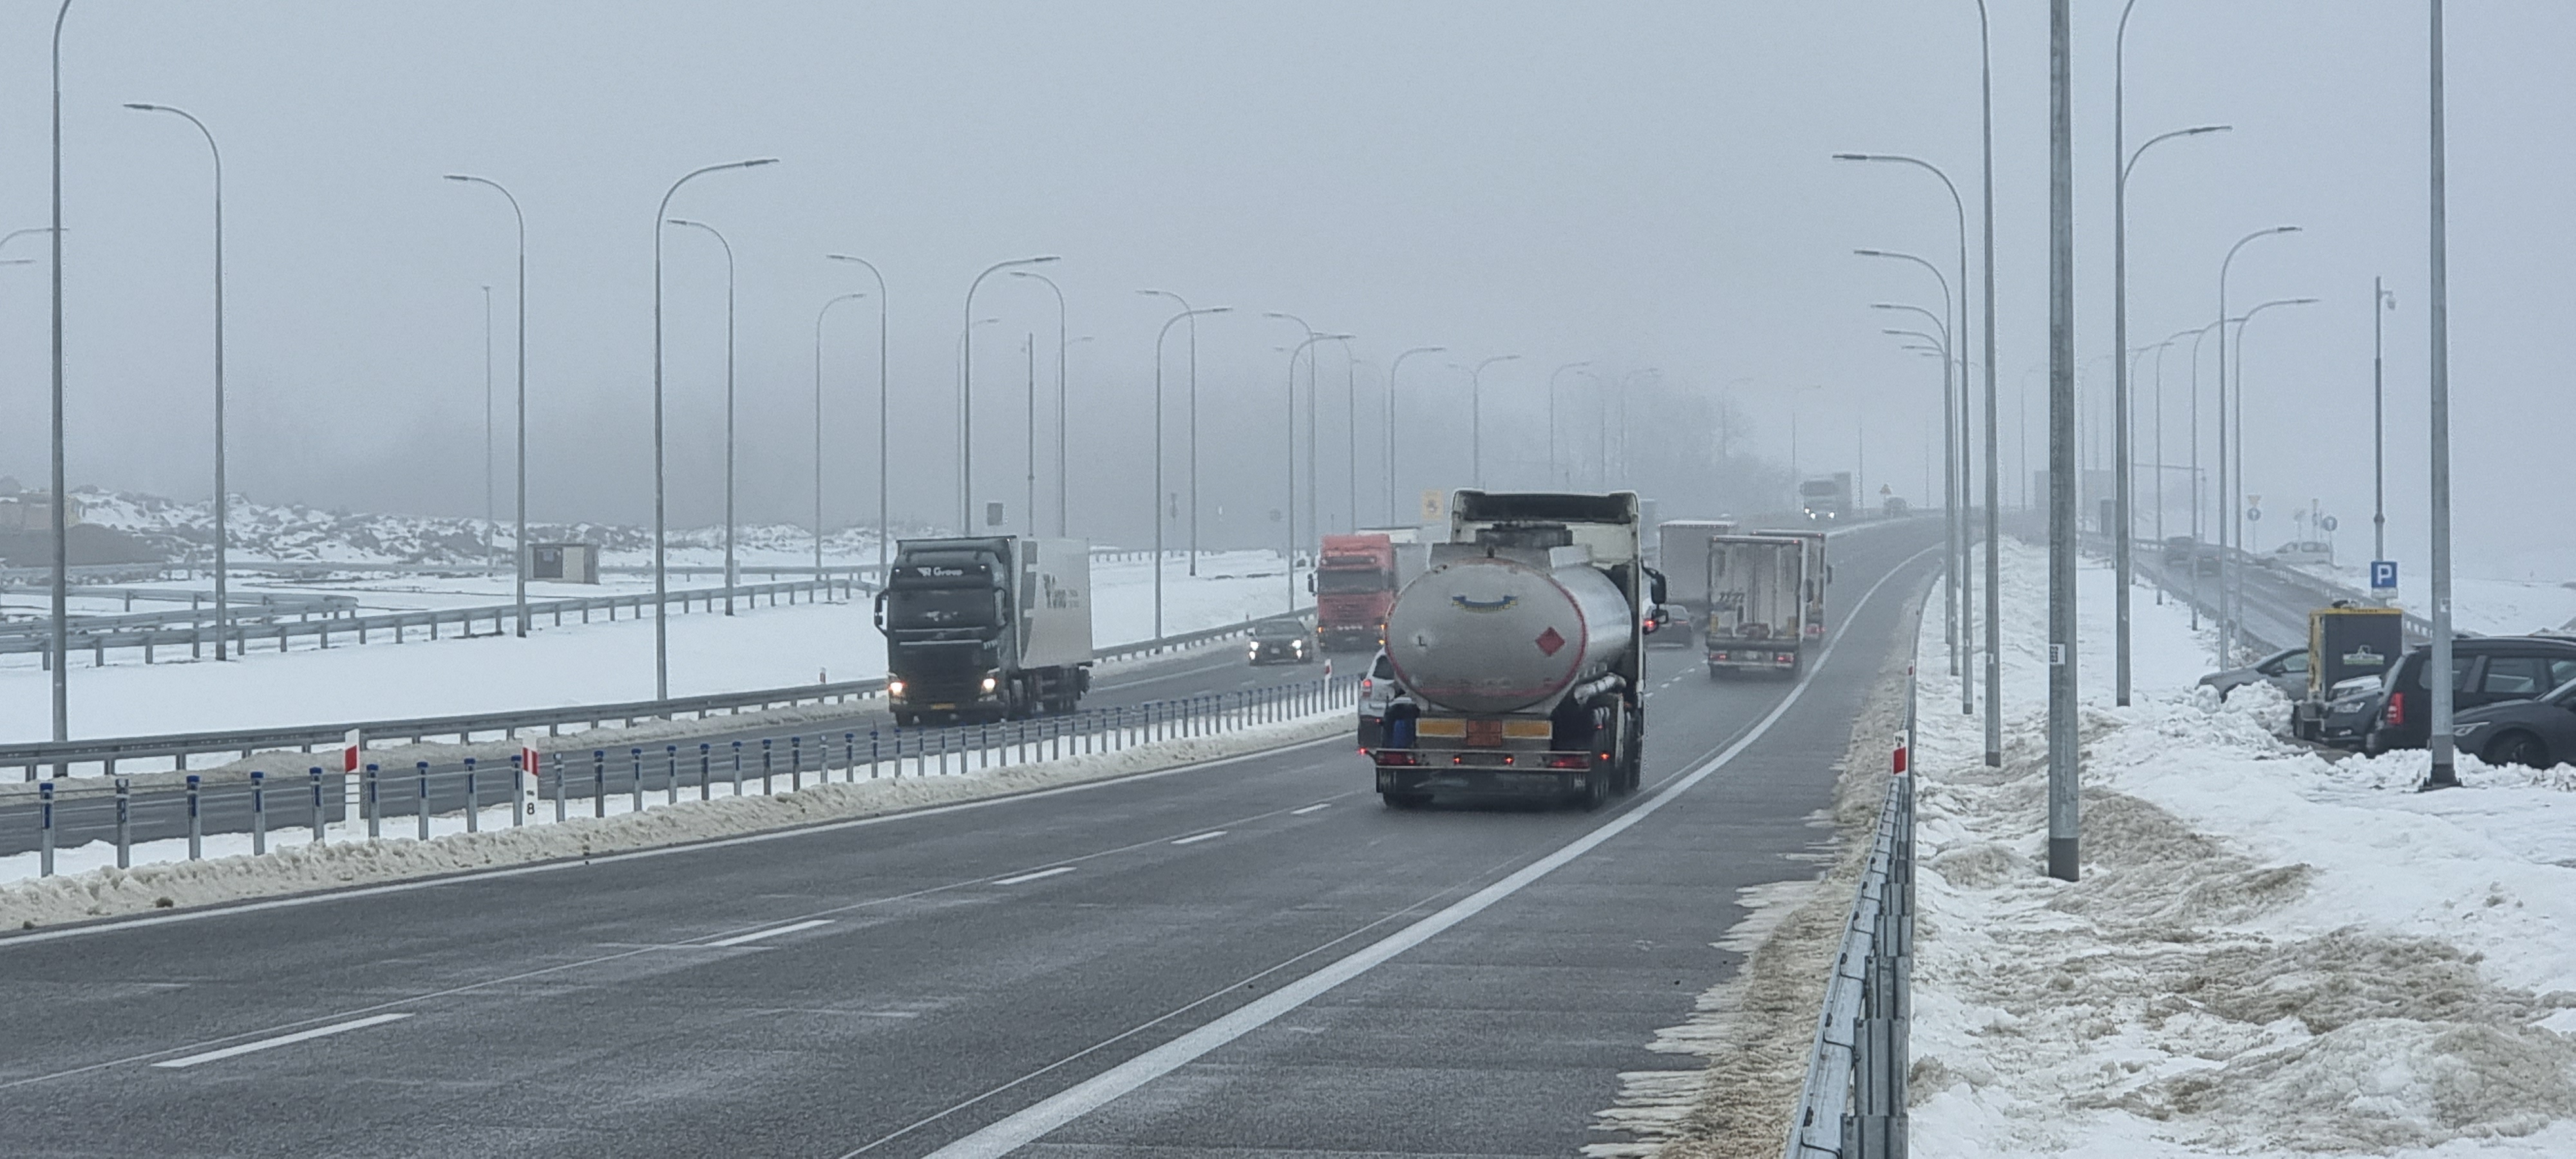 S61 expressway in Poland